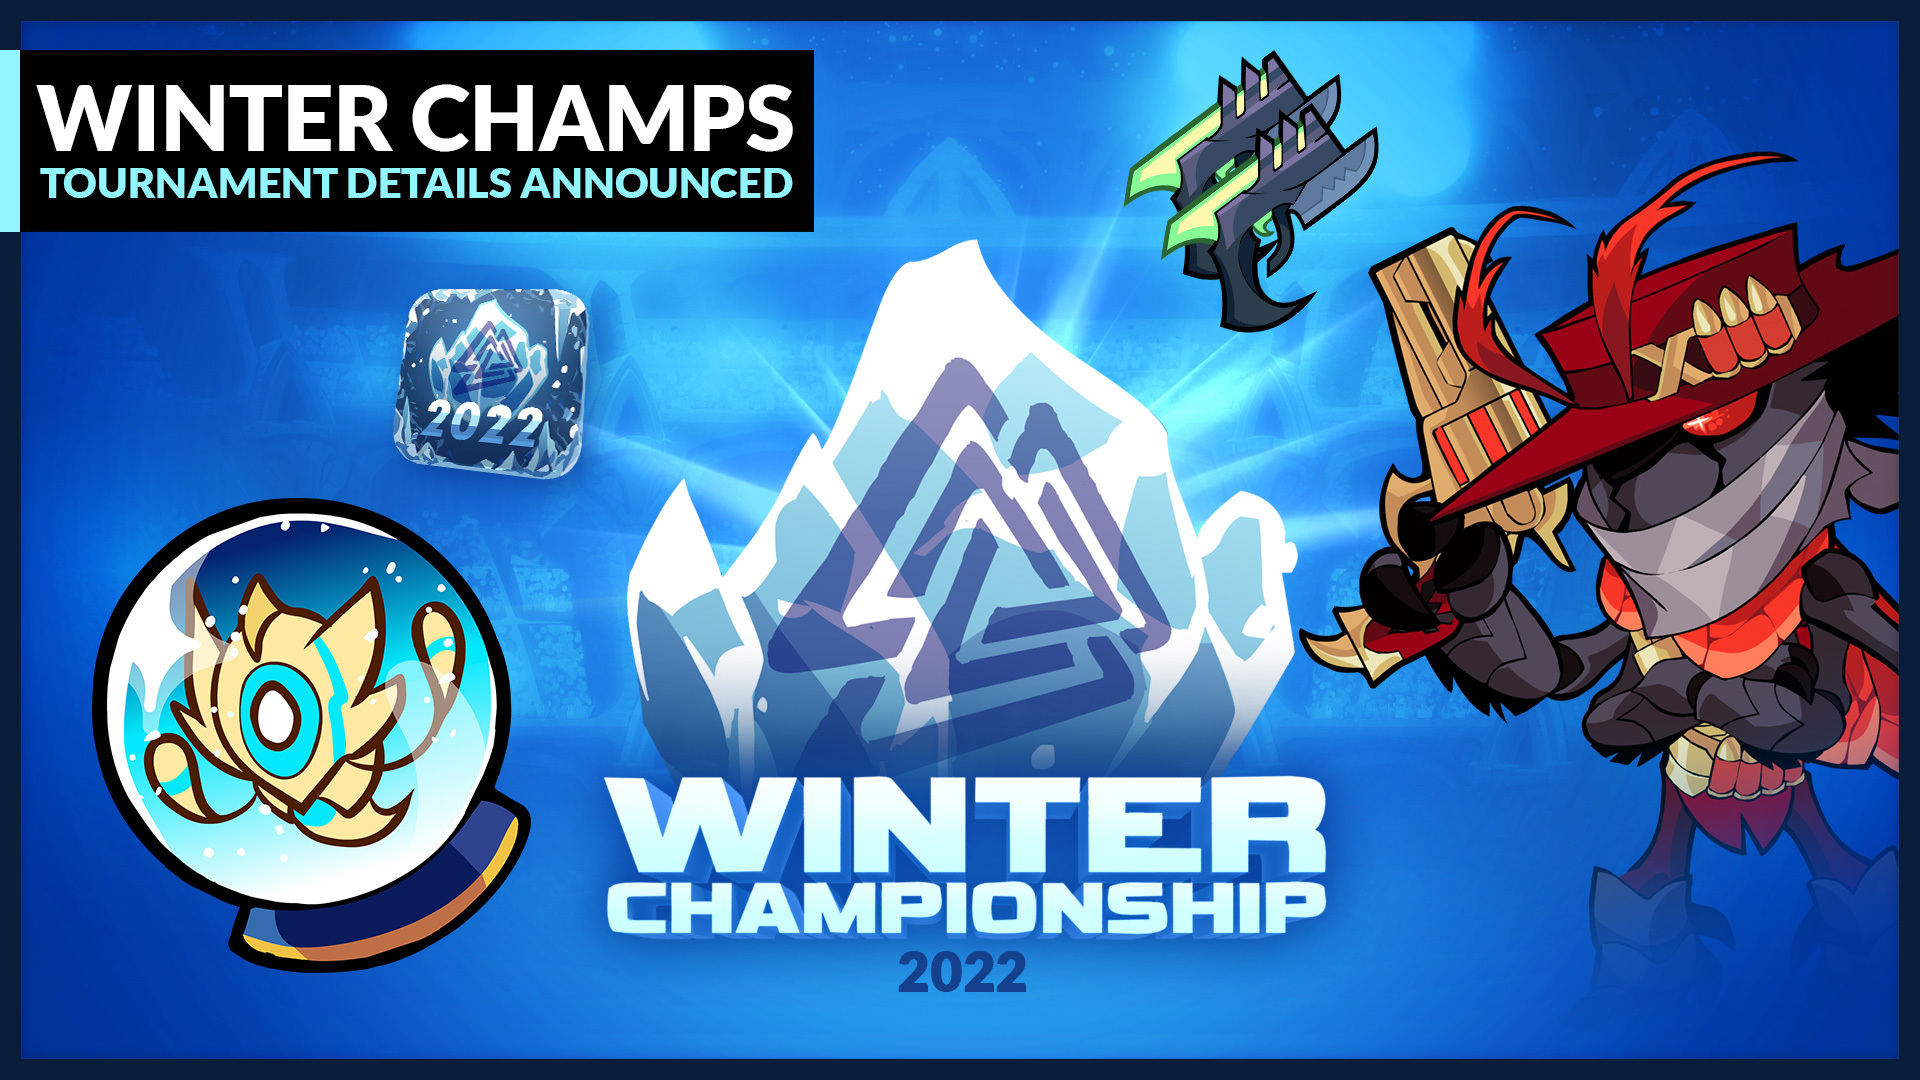 Register for the Brawlhalla Winter Championship 2022!